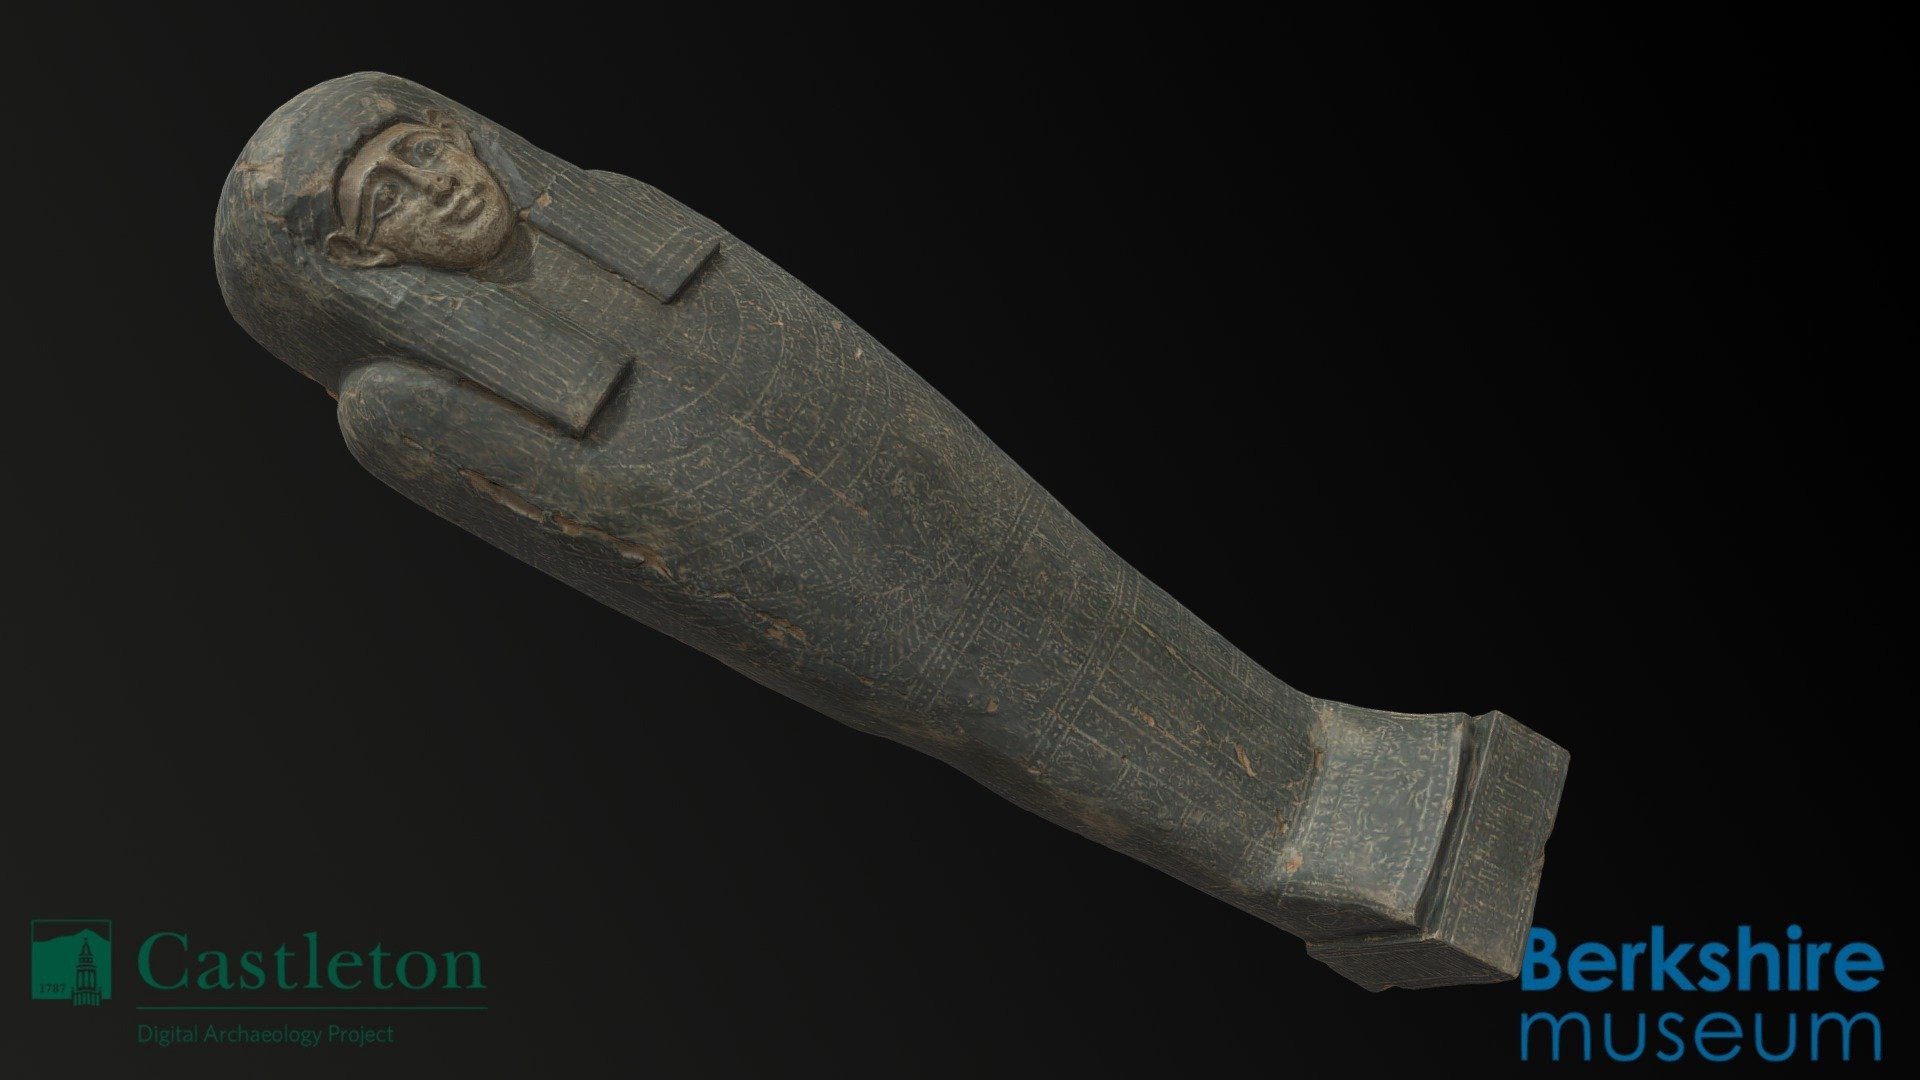 Sarcophagus lid, Pahat.  Berkshire Museum.  Details TBA.  See also: https://sketchfab.com/3d-models/pahat-lower-sarcophagus-and-mummy-cudap-30-60-a47efc3e45e2429aa9f257b00ac19a20 - Pahat Sarcophagus Lid (CUDAP_30_60) - 3D model by Vermont State Univ. Digital Archaeology Project (@VTSU3D) 3d model